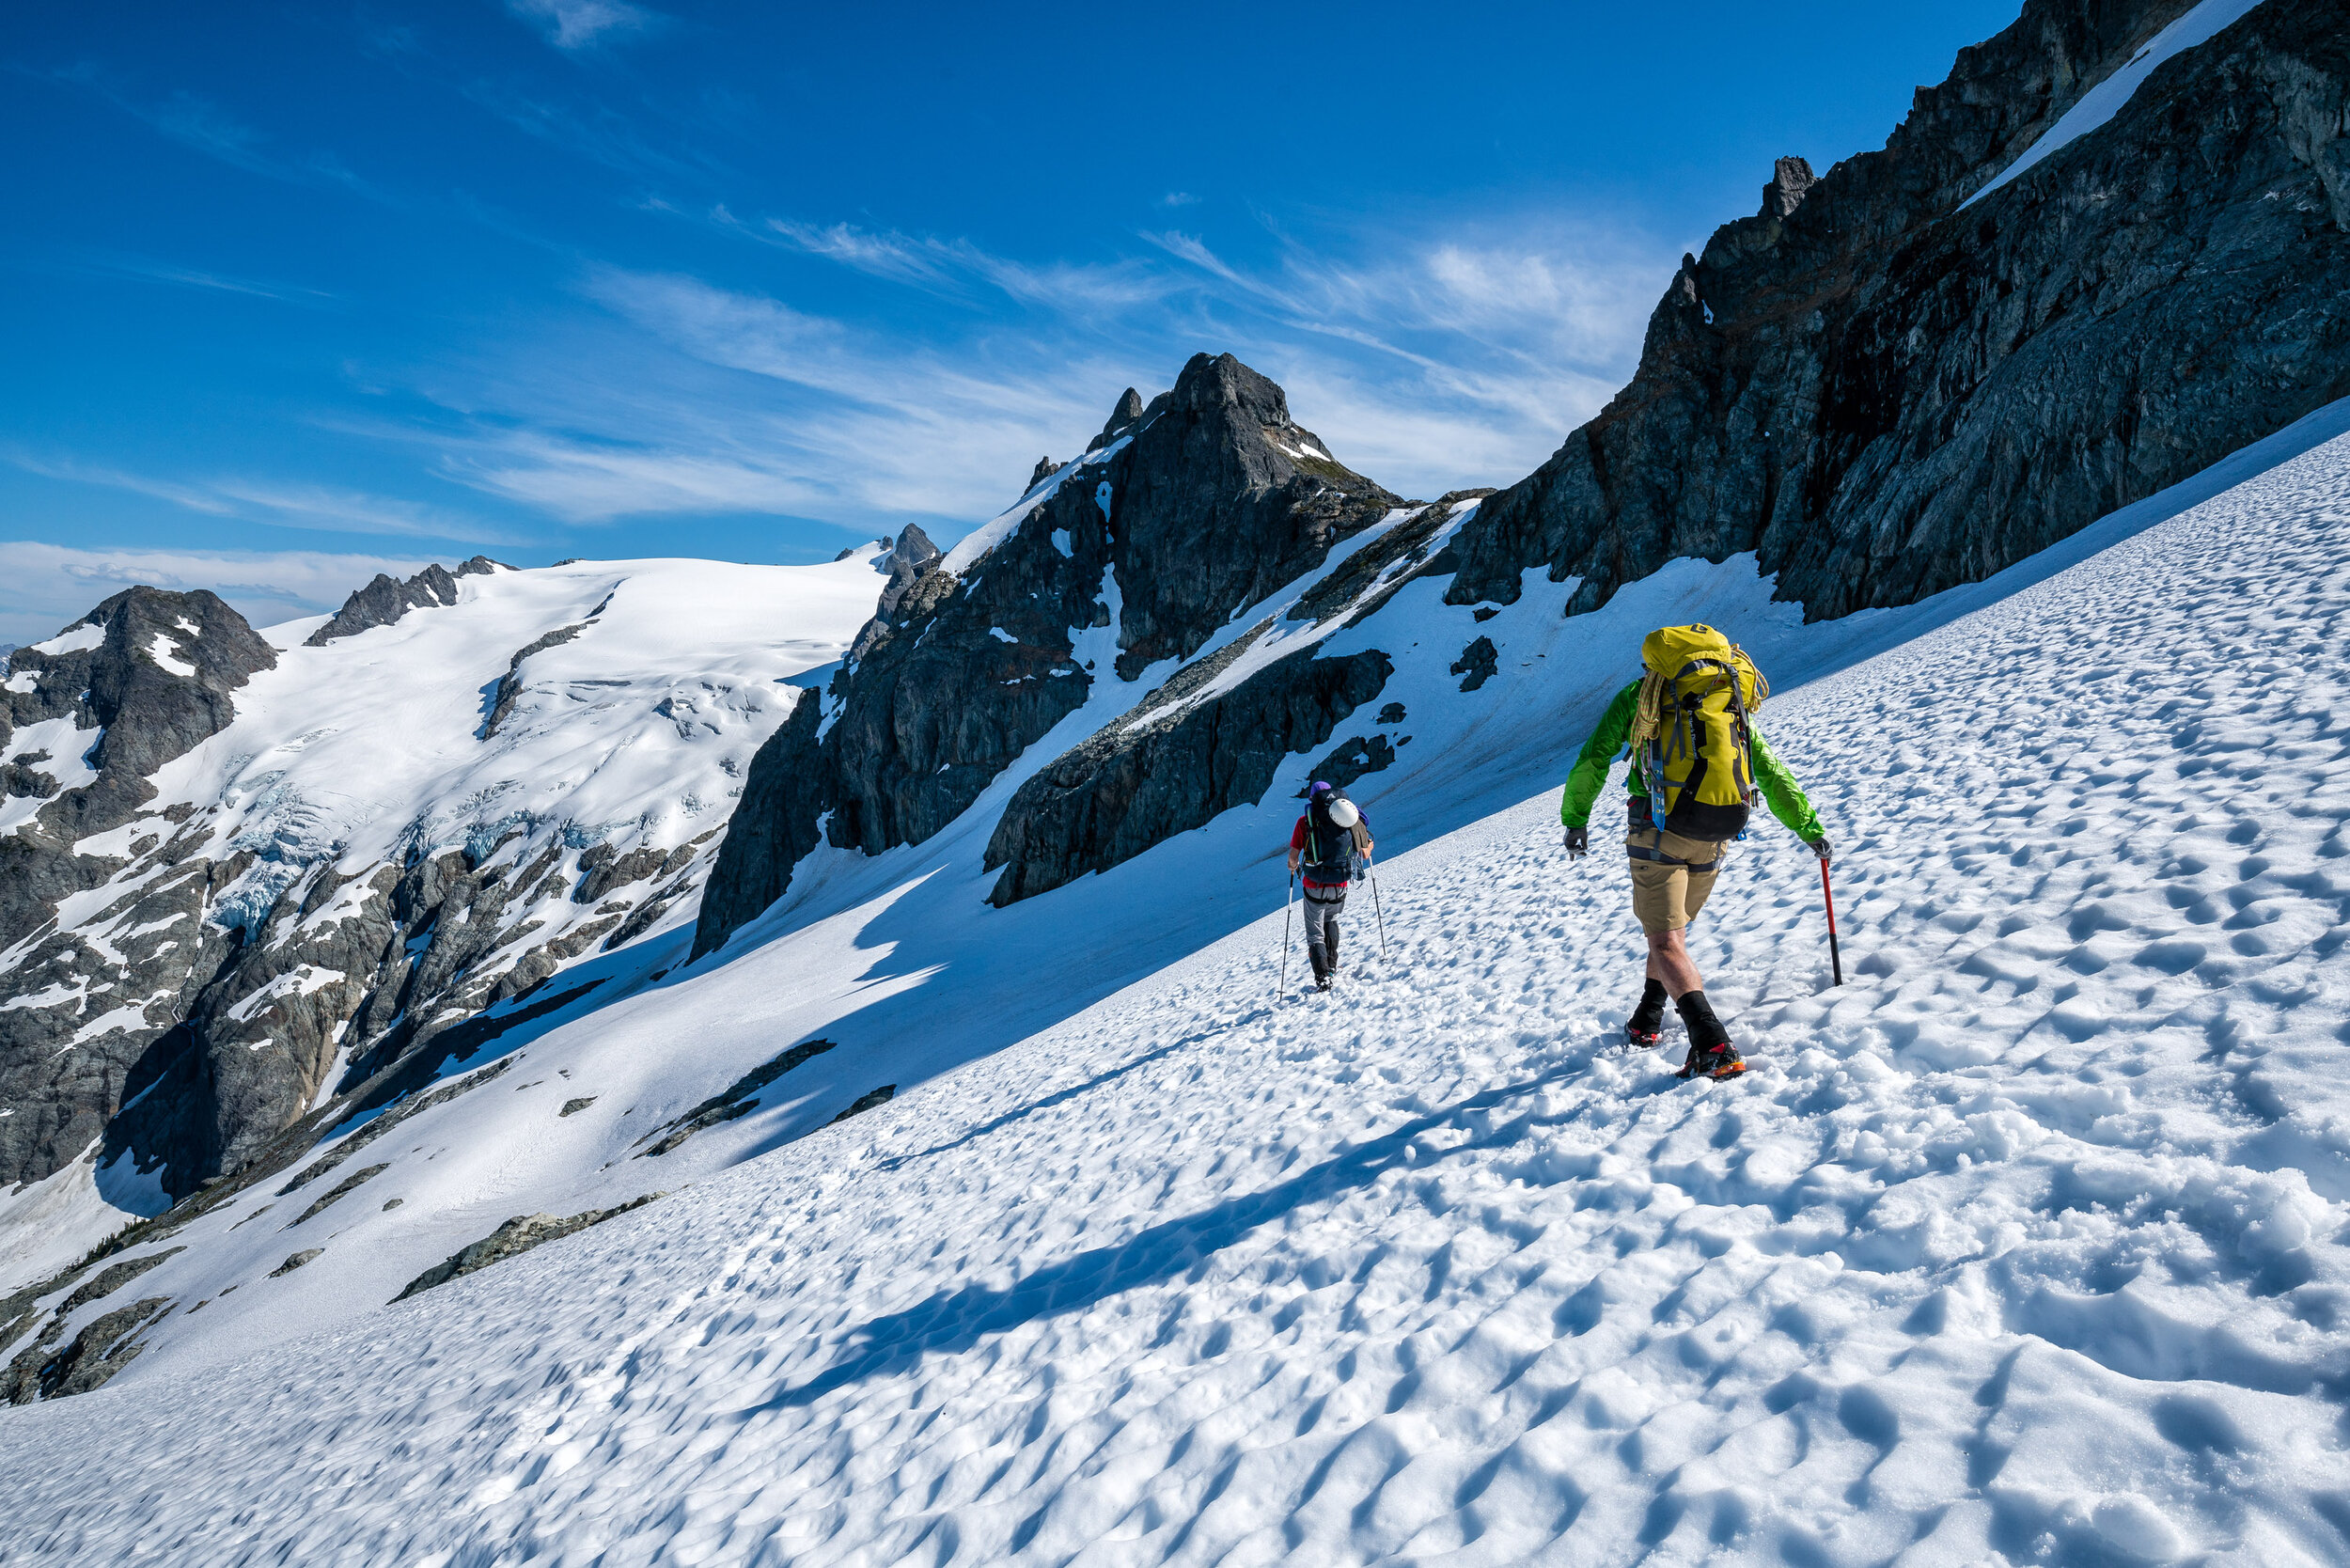  Adventure: A group of climbers traversing a snowy slope on the Ptarmigan Traverse, North Cascades, Washington 